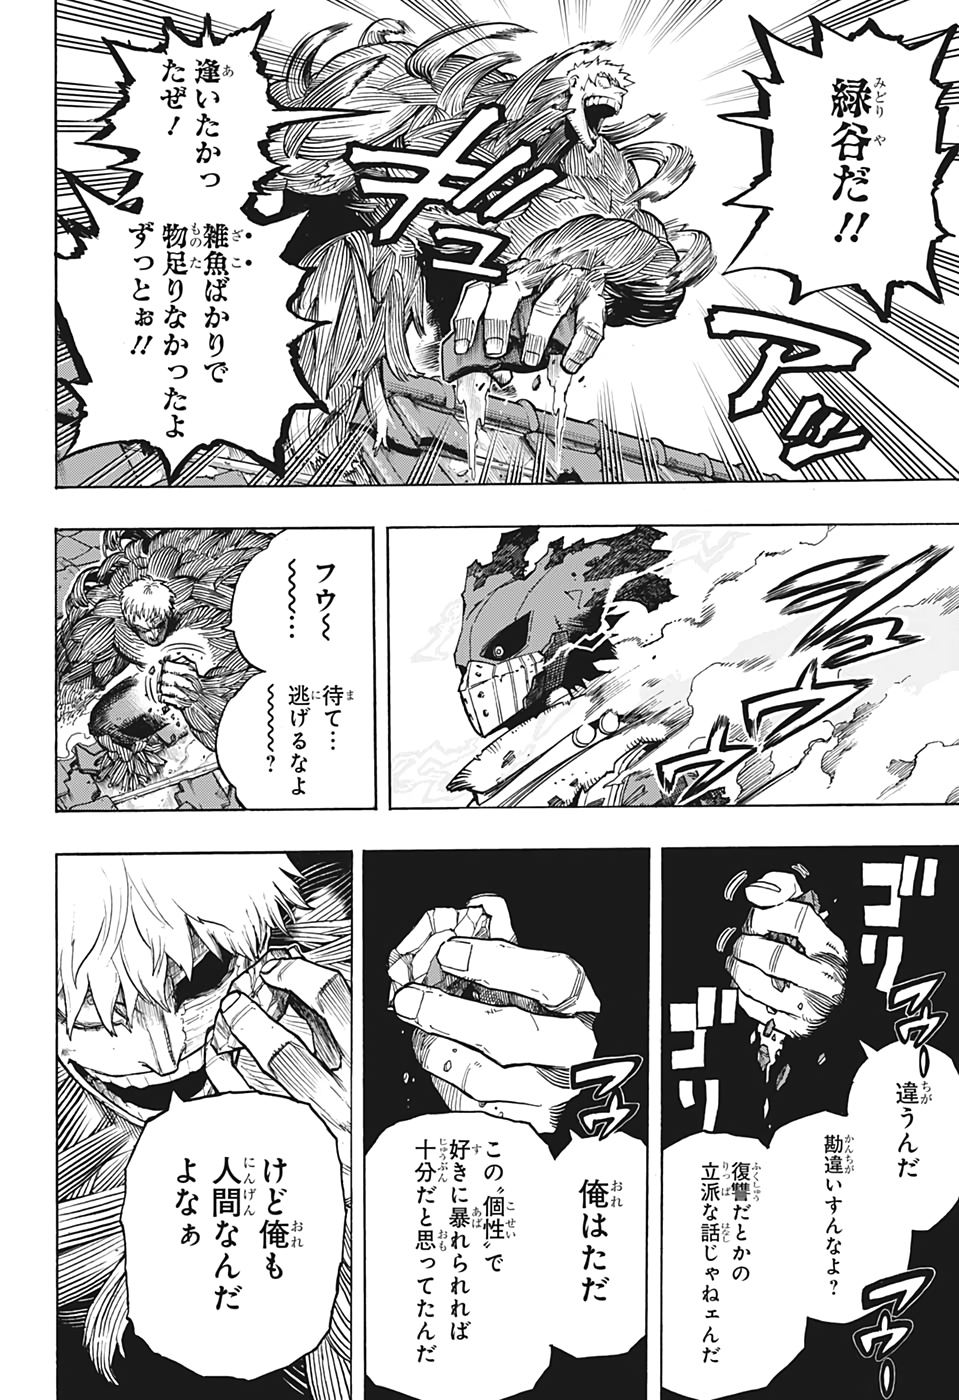 Boku no Hero Academia - Chapter 308 - Page 2